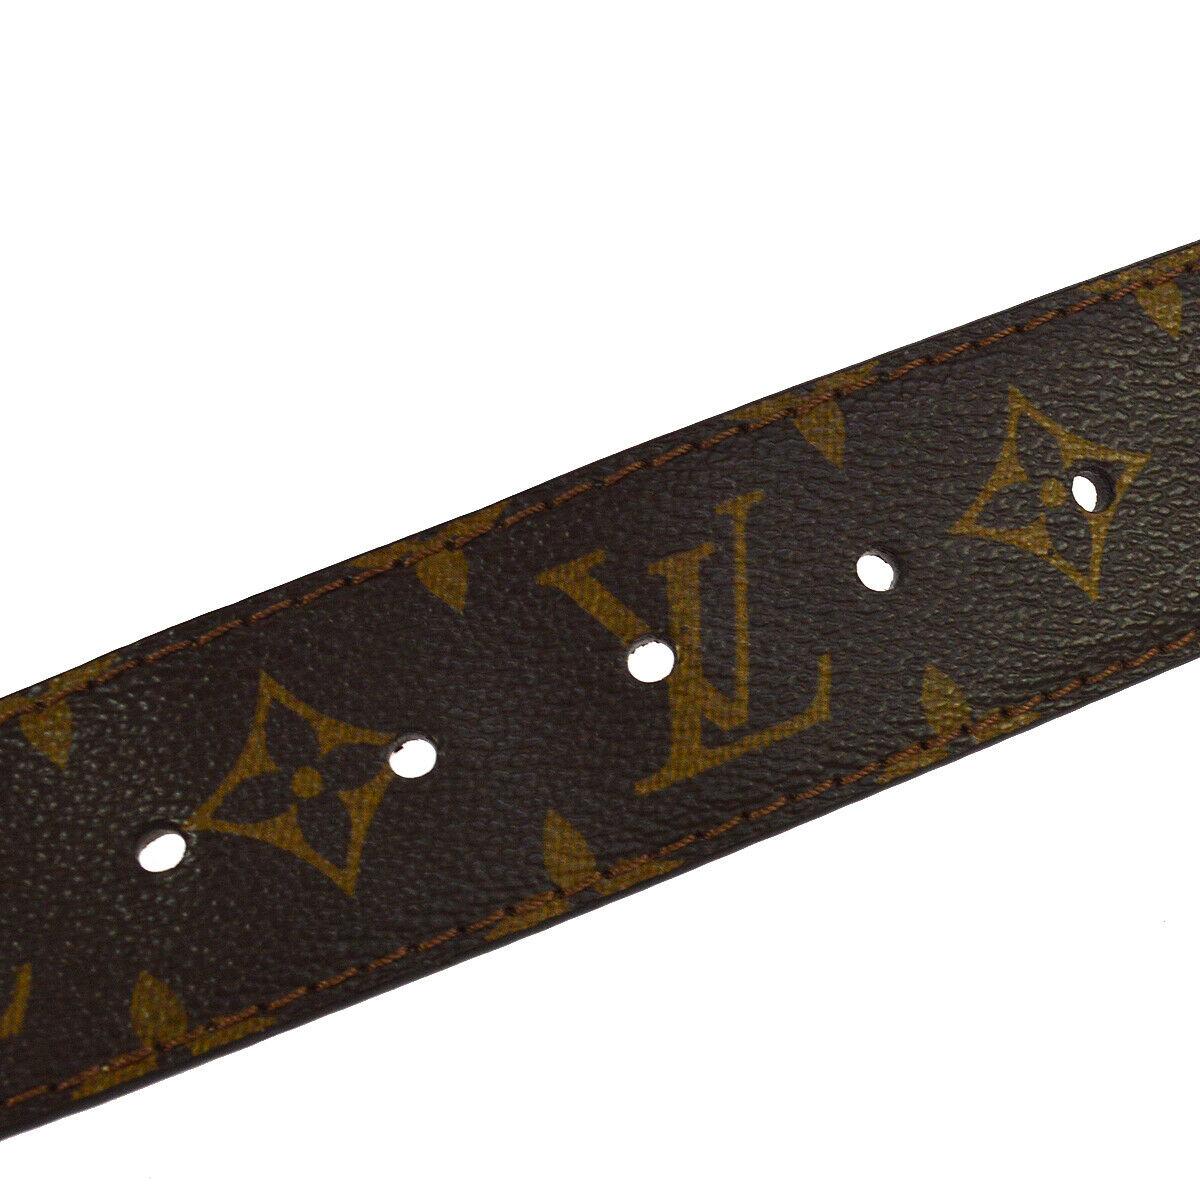 Louis Vuitton Monogram Men's Women's Pouch Bum Fanny Pack Waist Belt Bag

Belt size listed 90/36
Monogram canvas
Gold tone hardware
Buckle closure
Date code present
Width 1.5